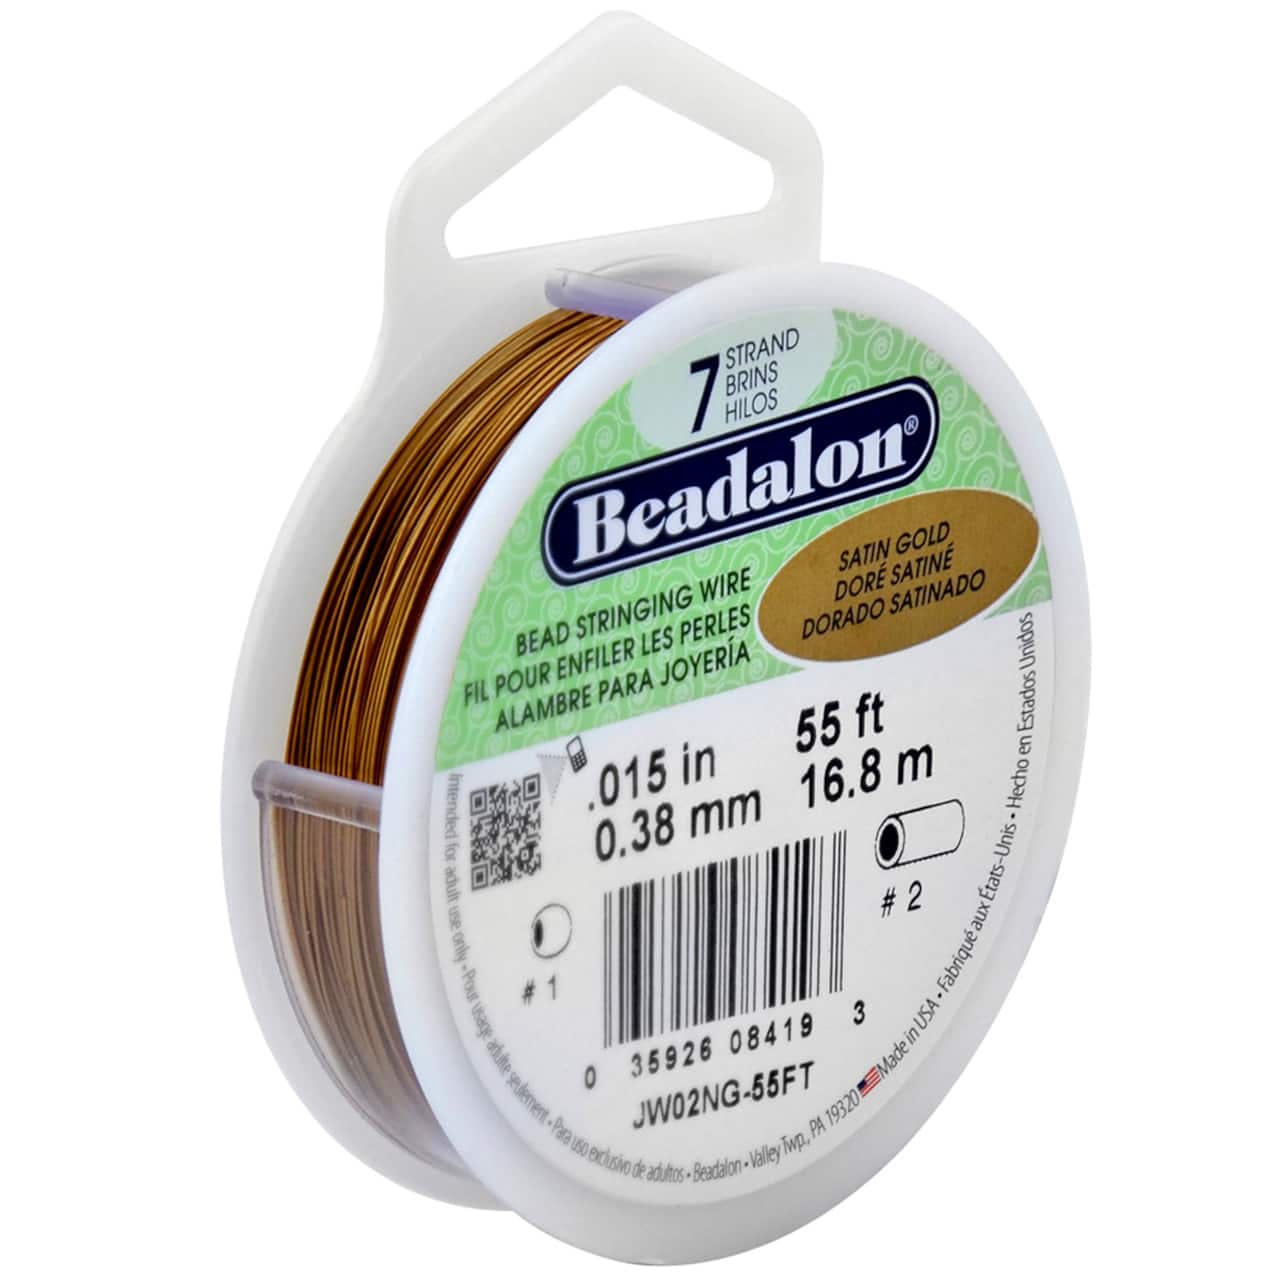 Beadalon&#xAE; 0.38mm Satin Gold 7 Strand Bead Stringing Wire